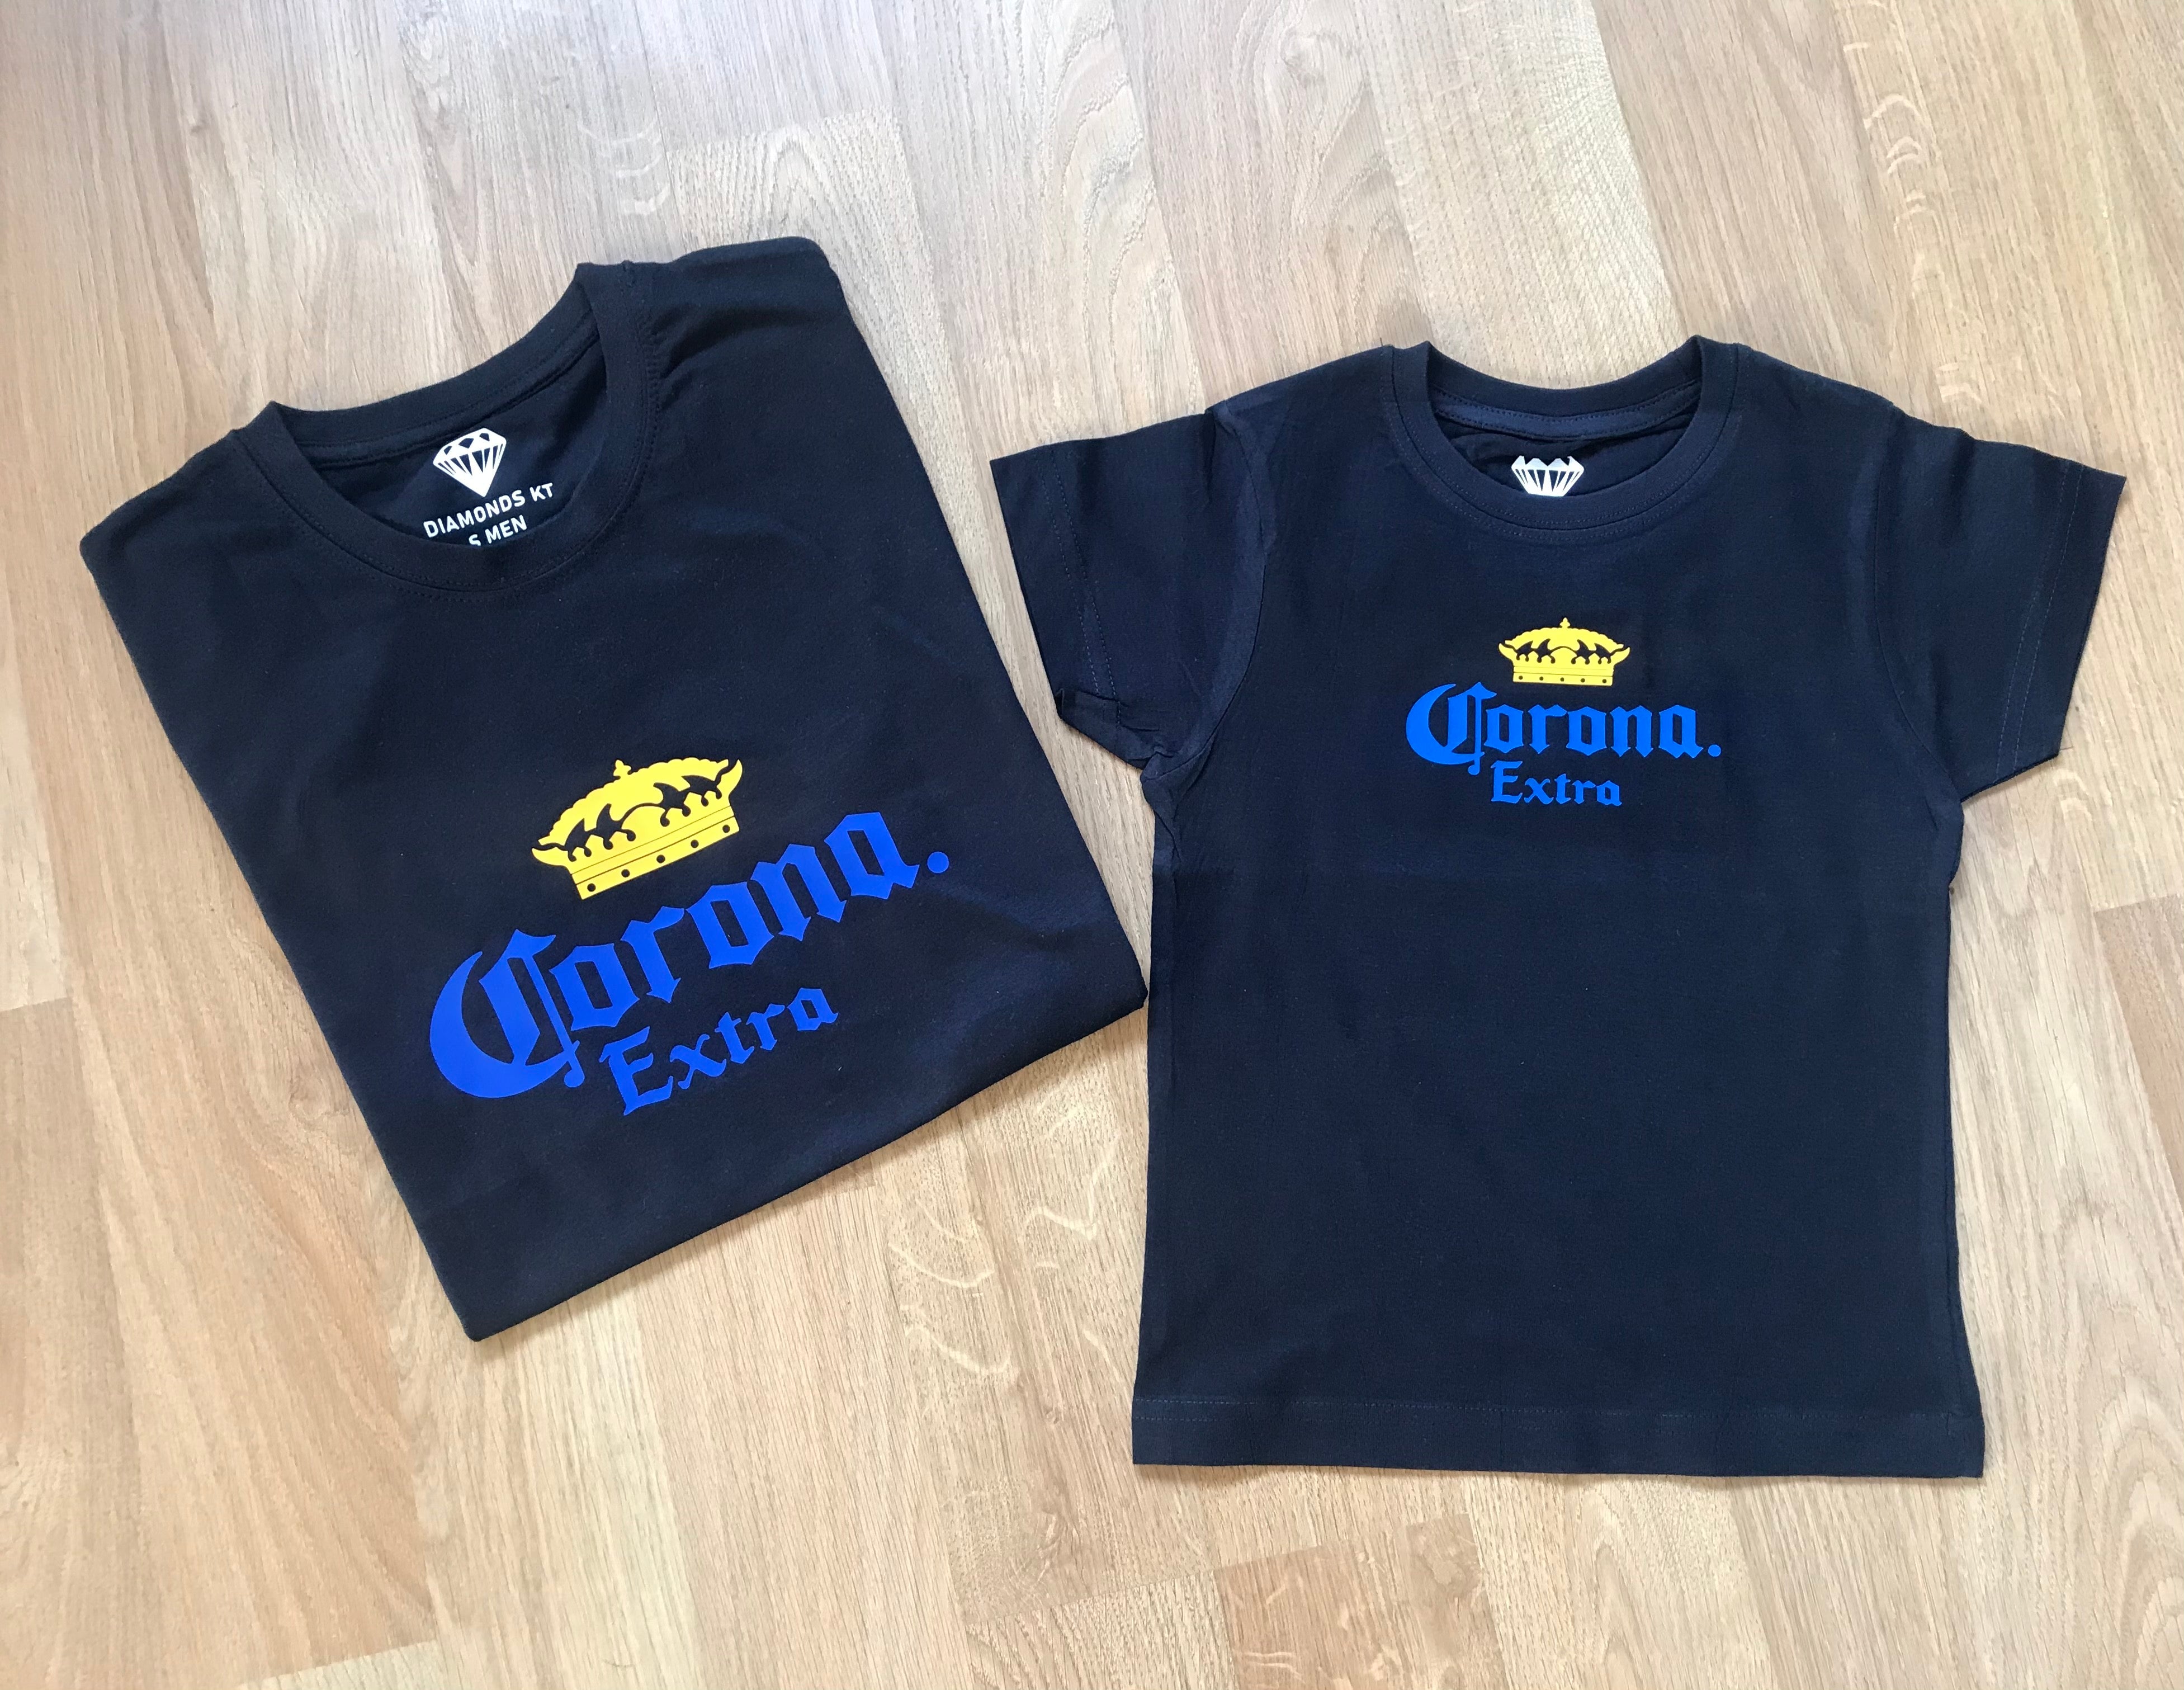 Corona Extra T shirt or Hoodie-men woman T shirts-DiamondsKT